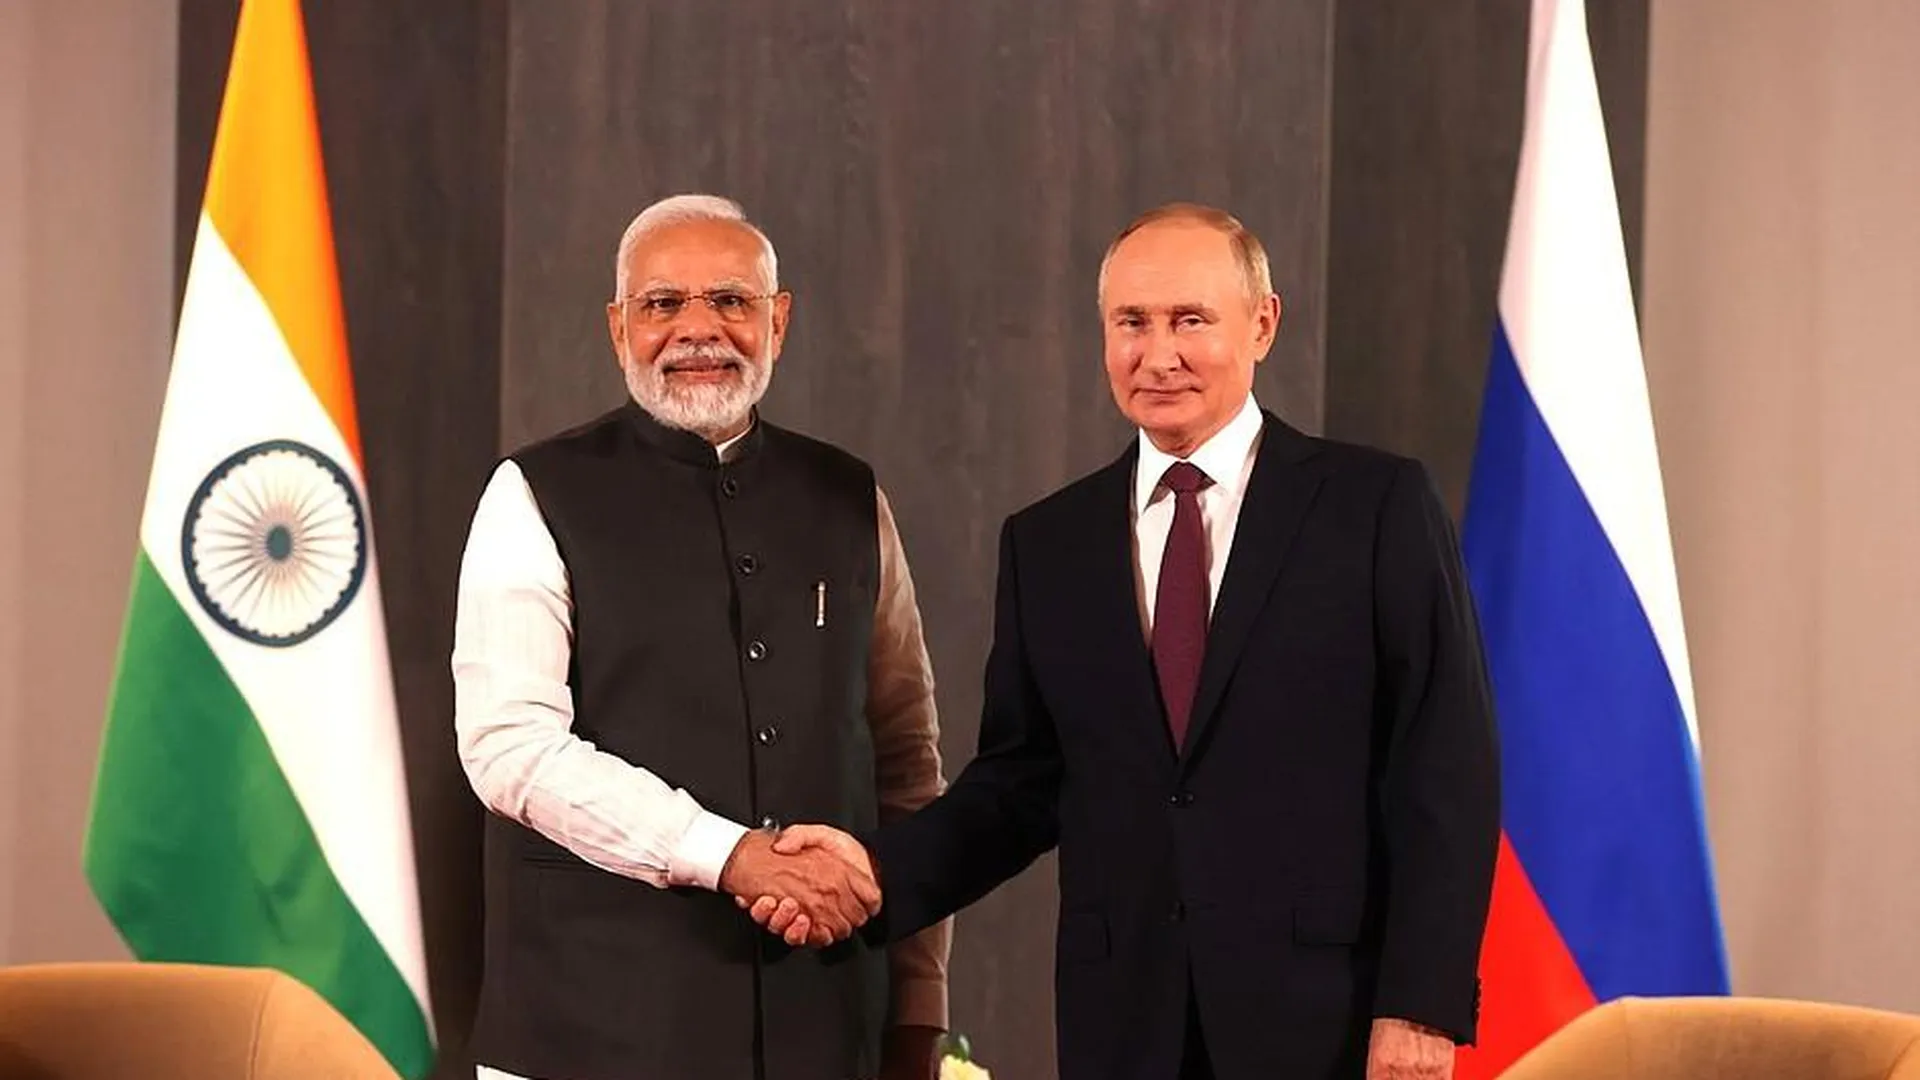 Источник фото: сайт Кремля
Владимир Путин и Нарендра Моди во время встречи по окончании саммита ШОС в Самарканде, 2022